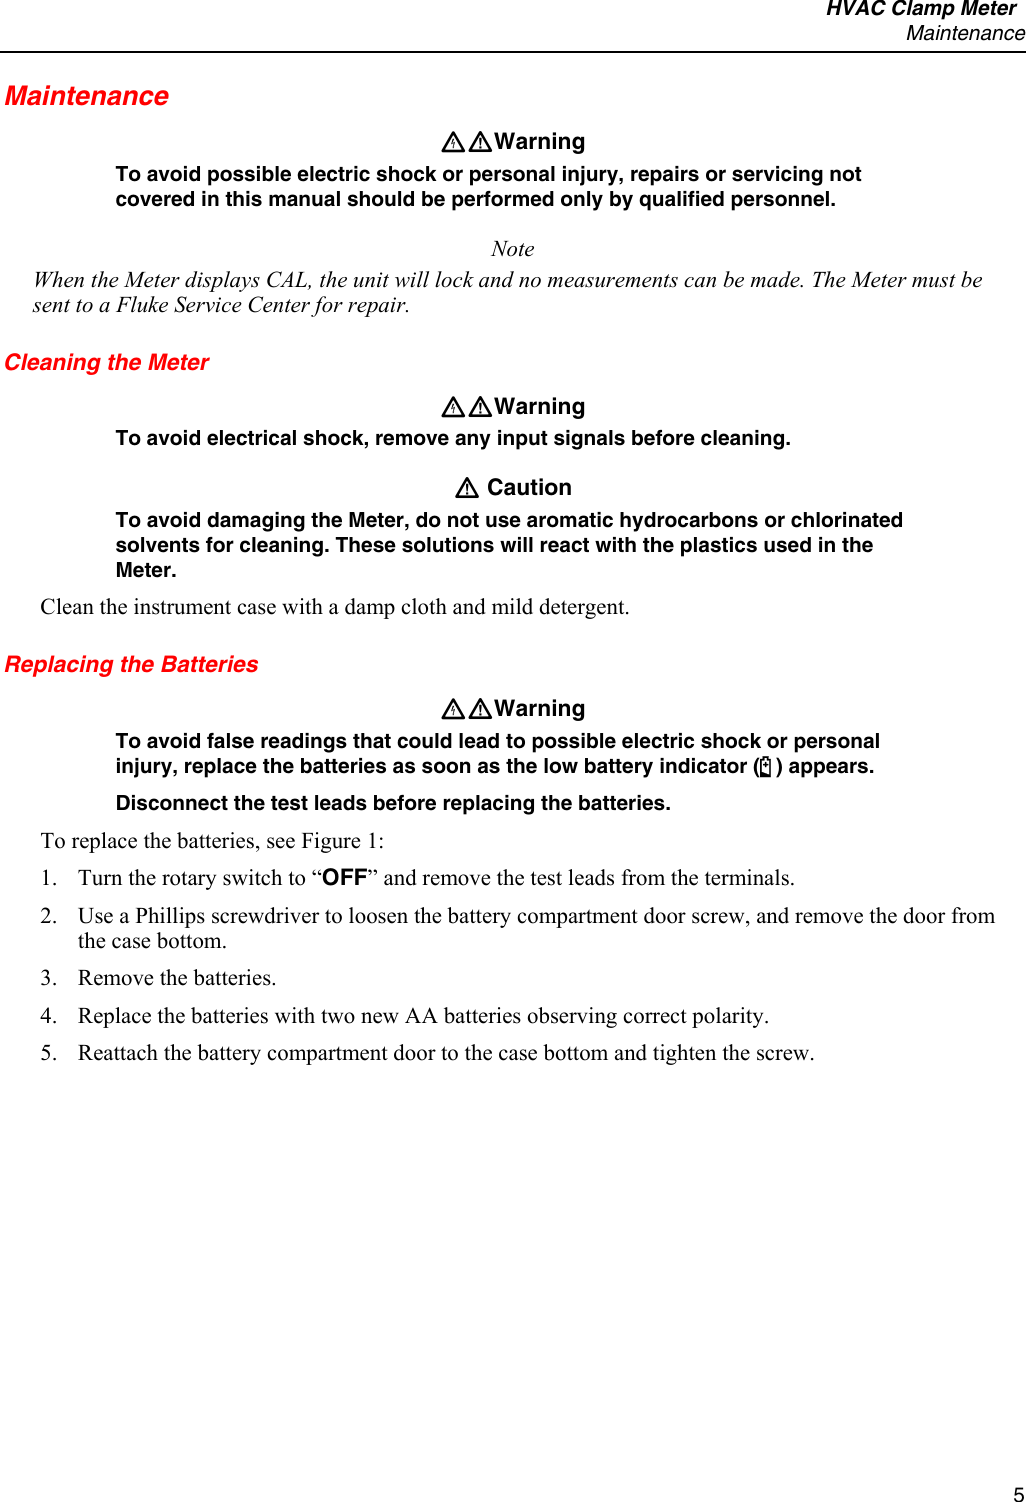 Page 5 of 12 - Fluke Fluke-902-Users-Manual 902_caltext